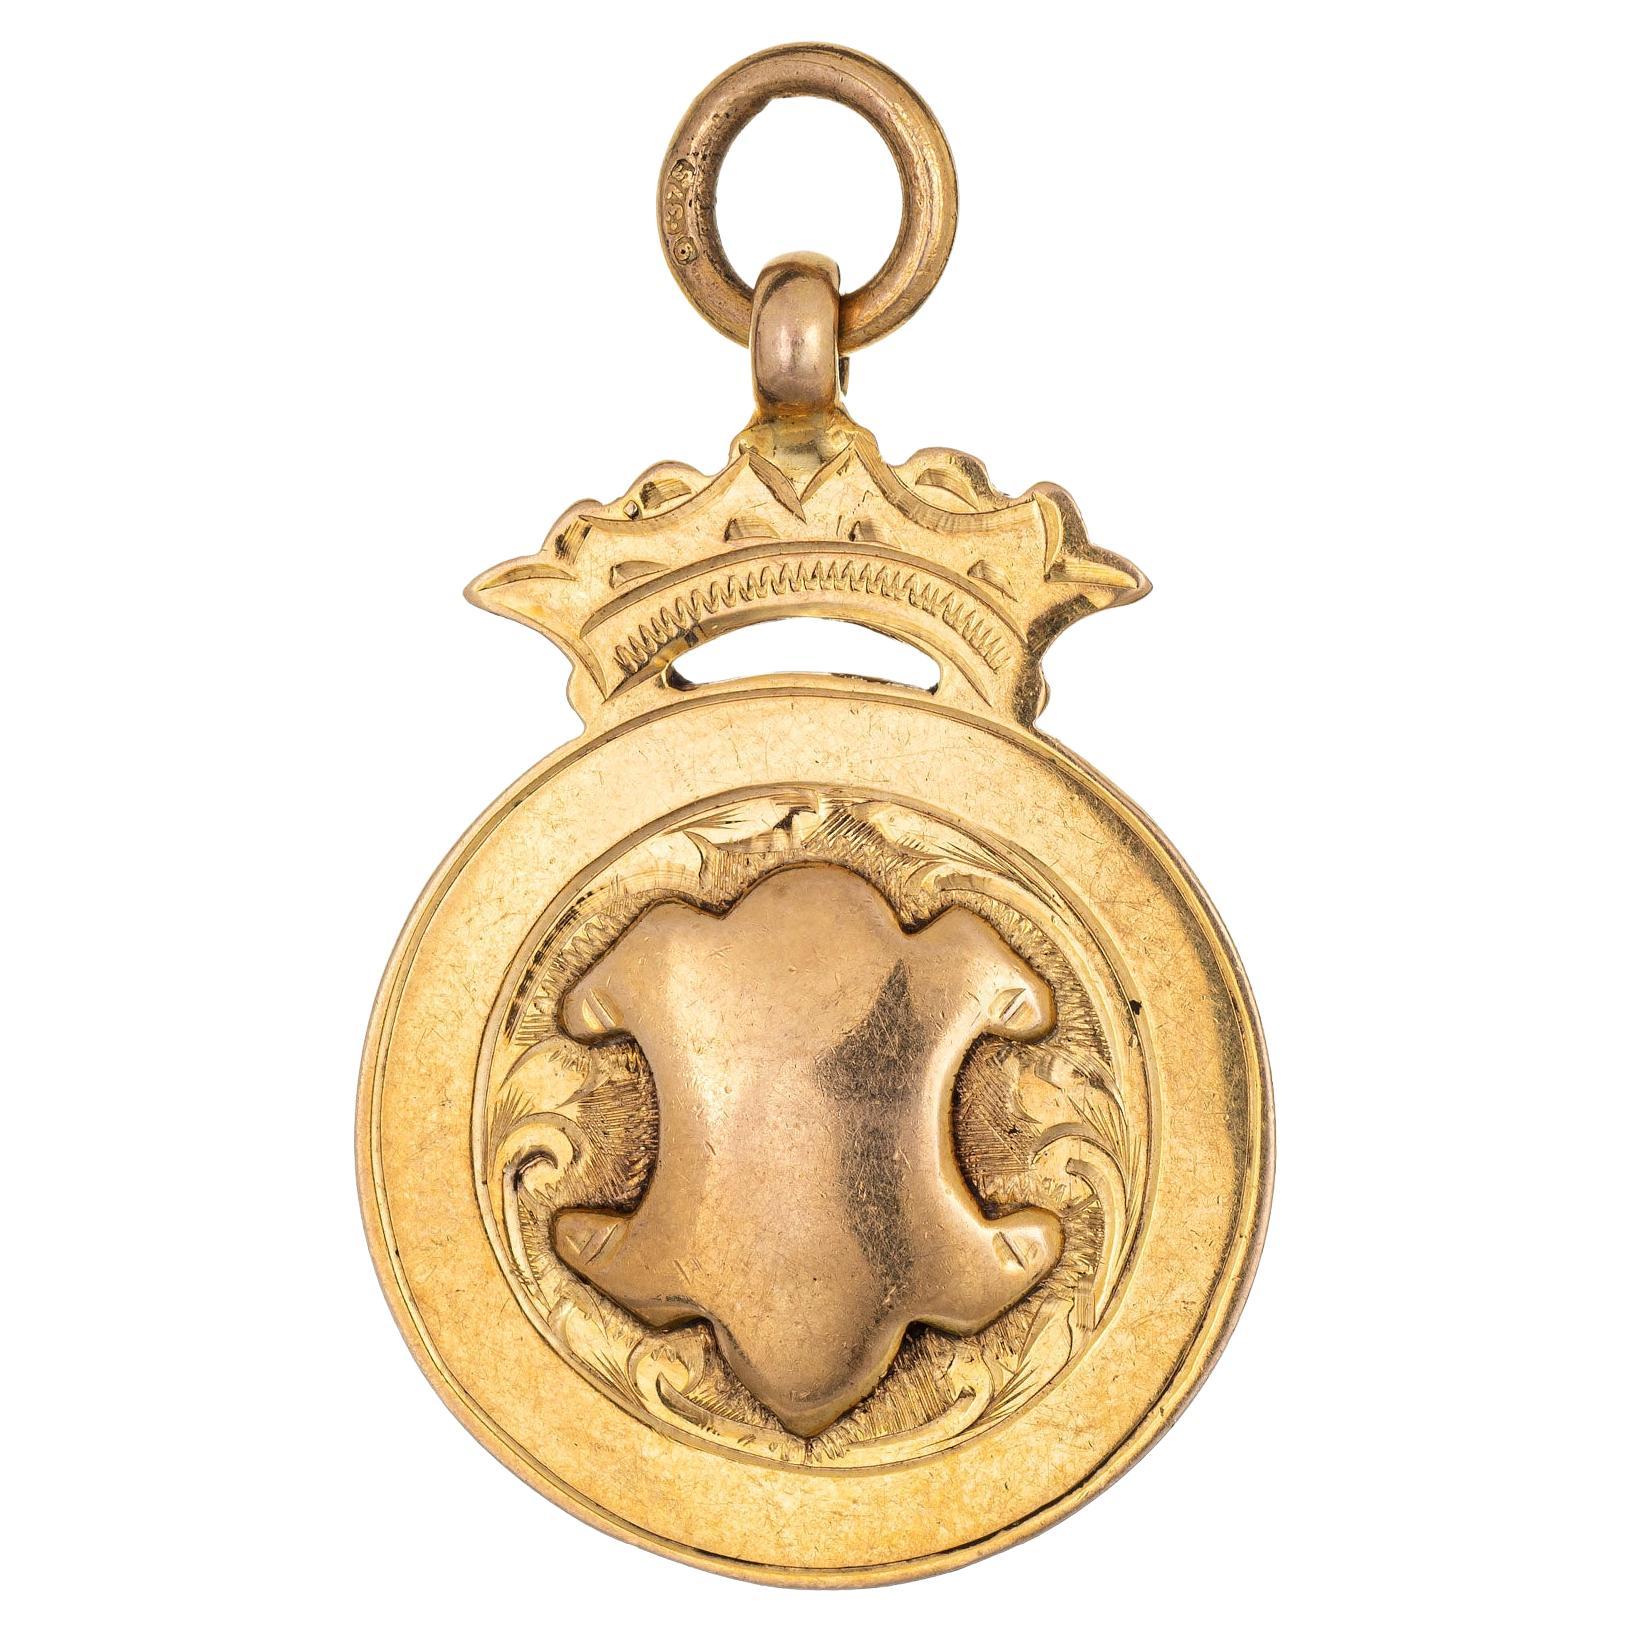 Vintage 1923 Art Deco Medallion 9k Yellow Gold Pendant Charm Fine Jewelry Fob